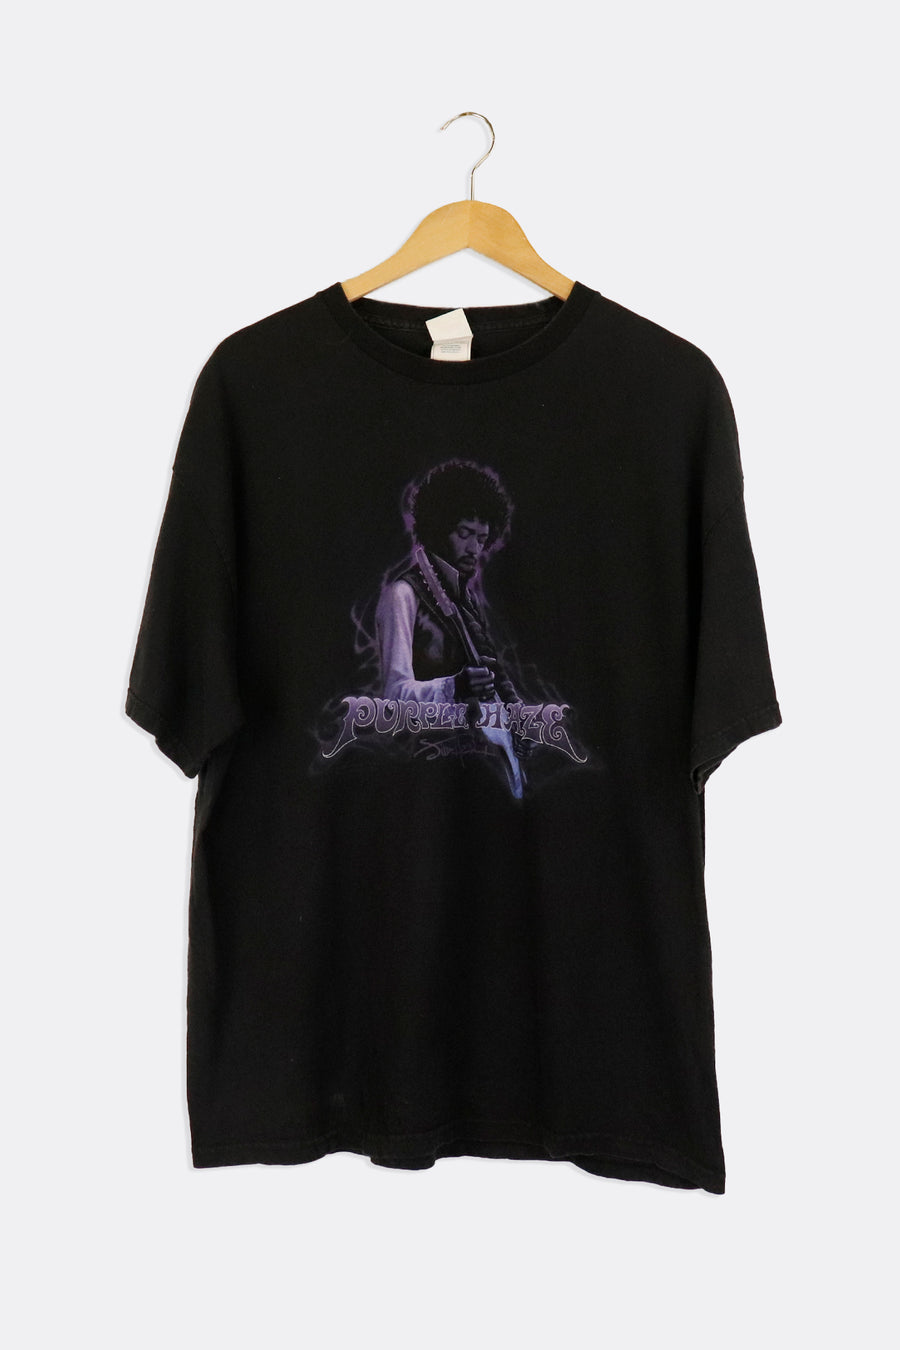 Vintage Jimi Hendrix Purple Haze Cartoon Portrait Graphic T Shirt Sz XL